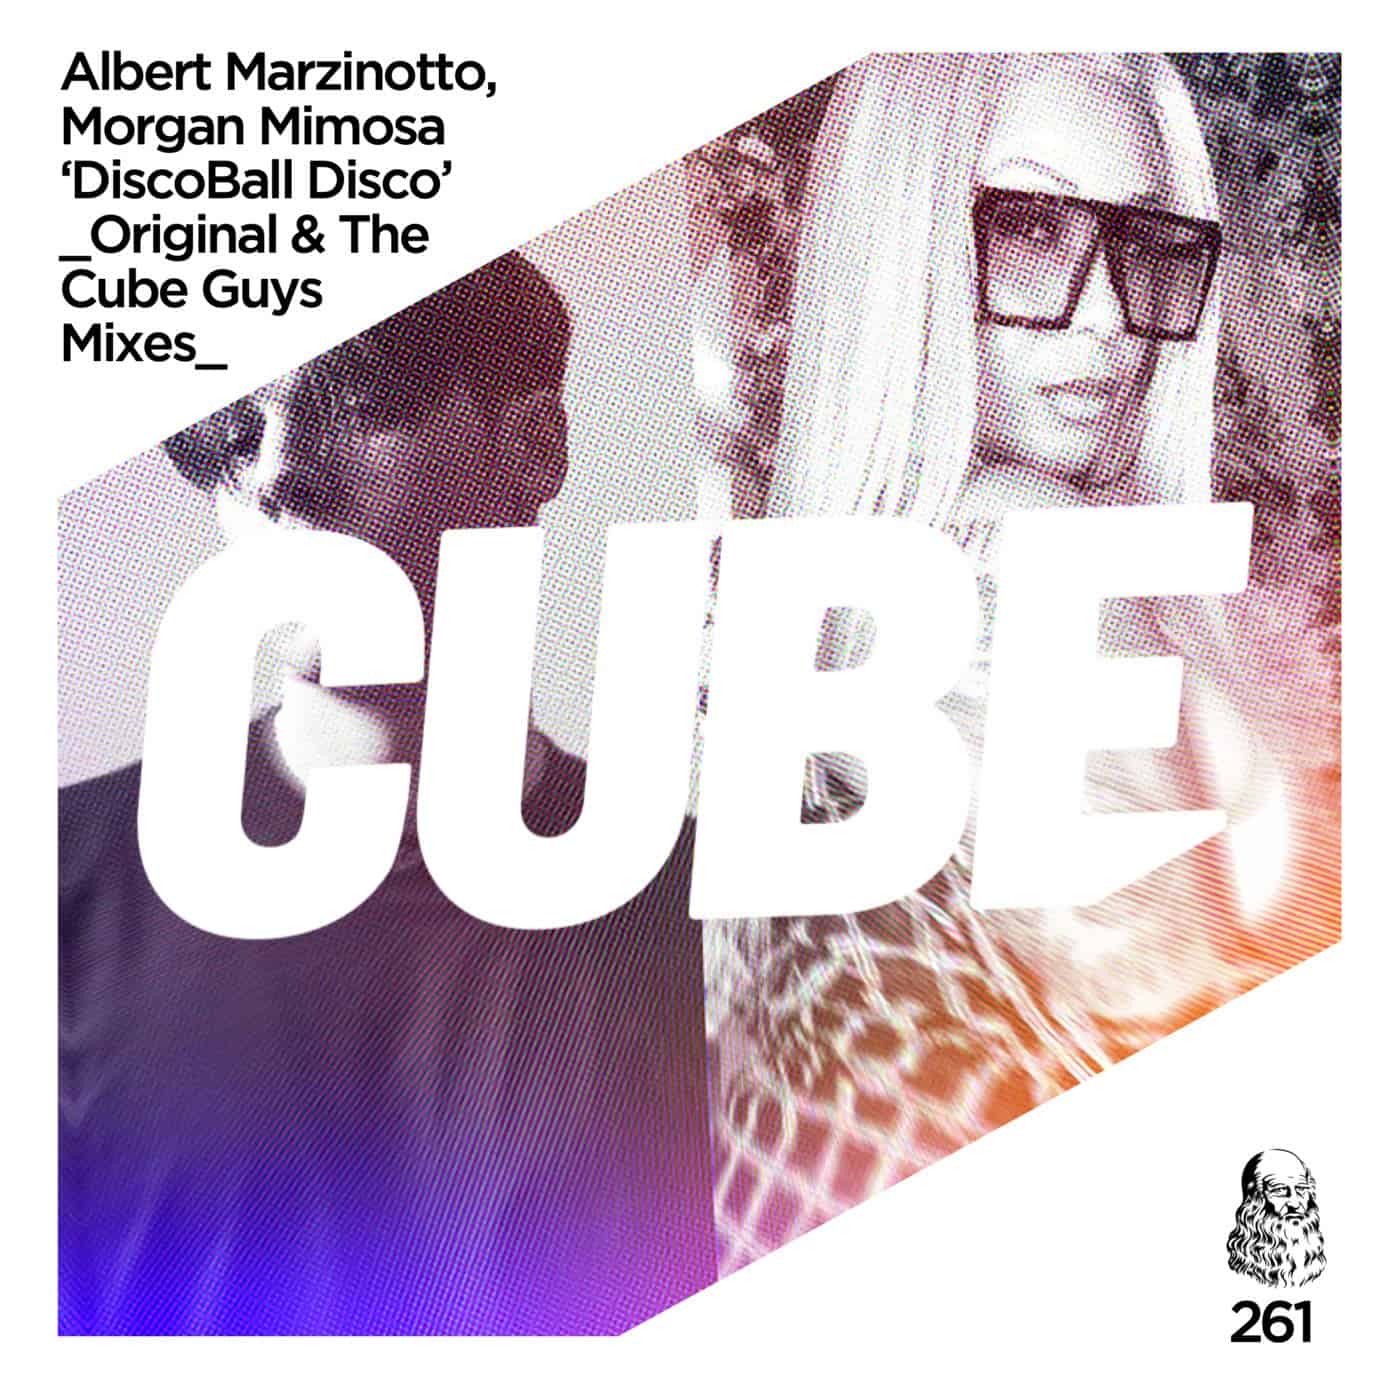 Download Albert Marzinotto, Morgan Mimosa - DiscoBall Disco on Electrobuzz